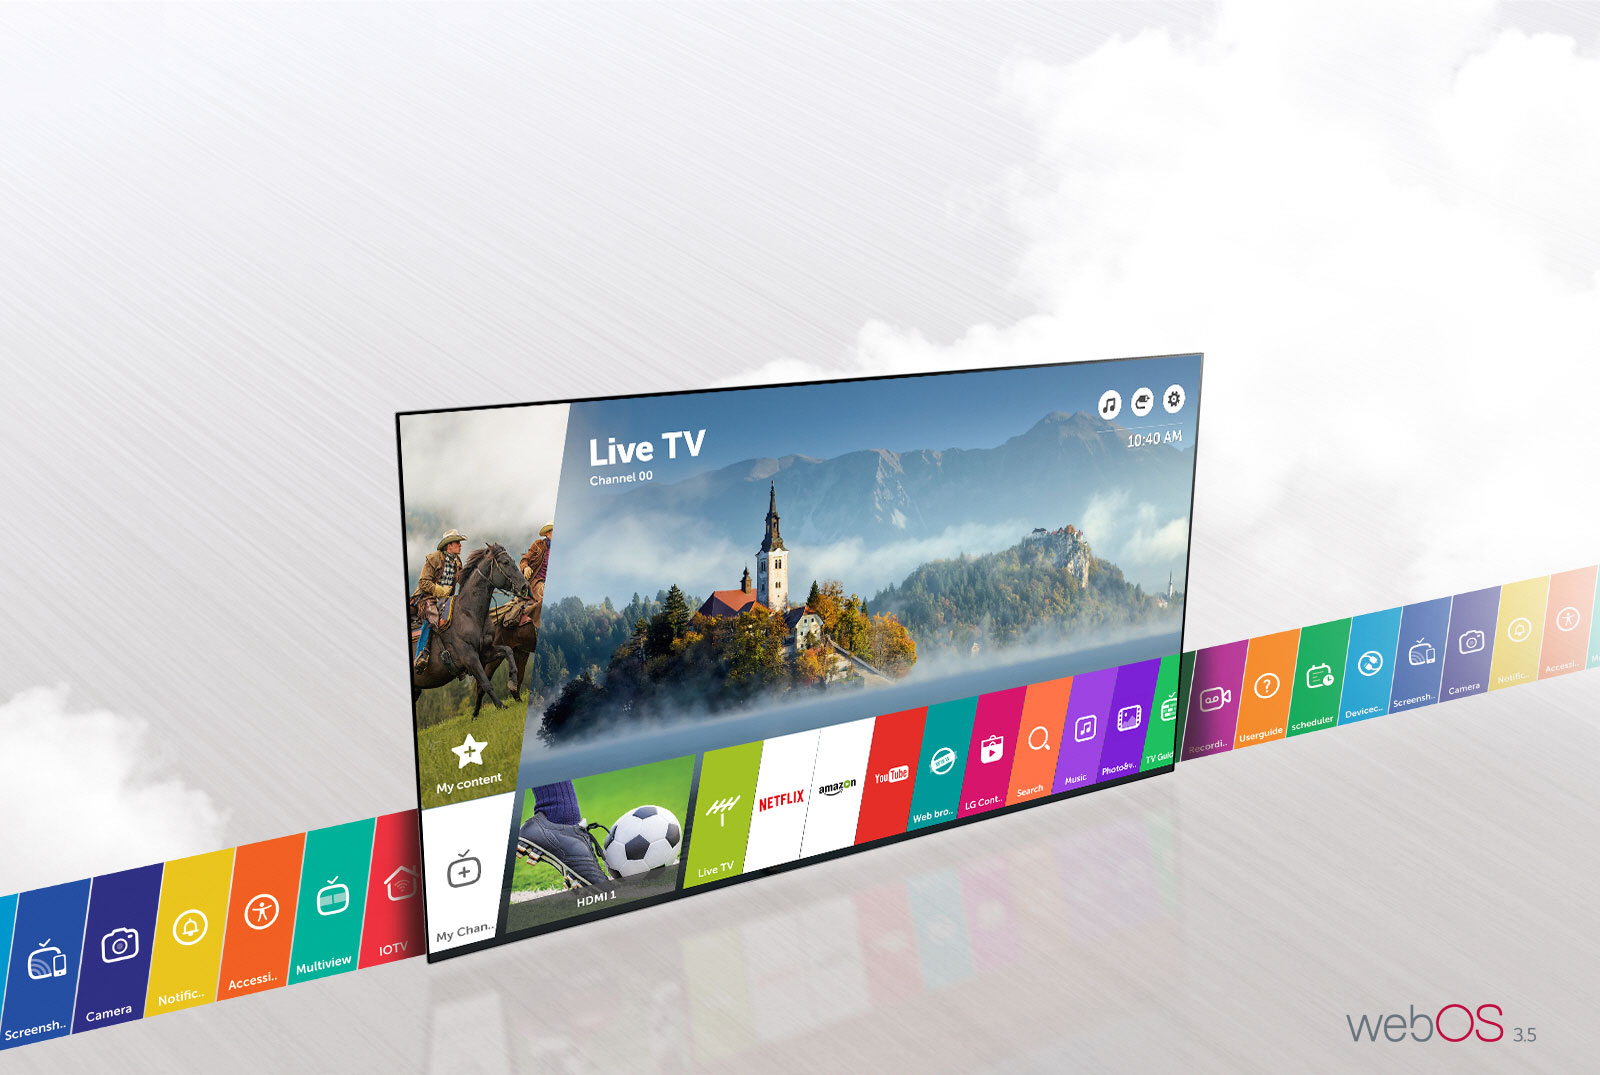 تلویزیون اسمارت ال جی LED TV Smart LG 49LJ55000GI - سایز 49 اینچ